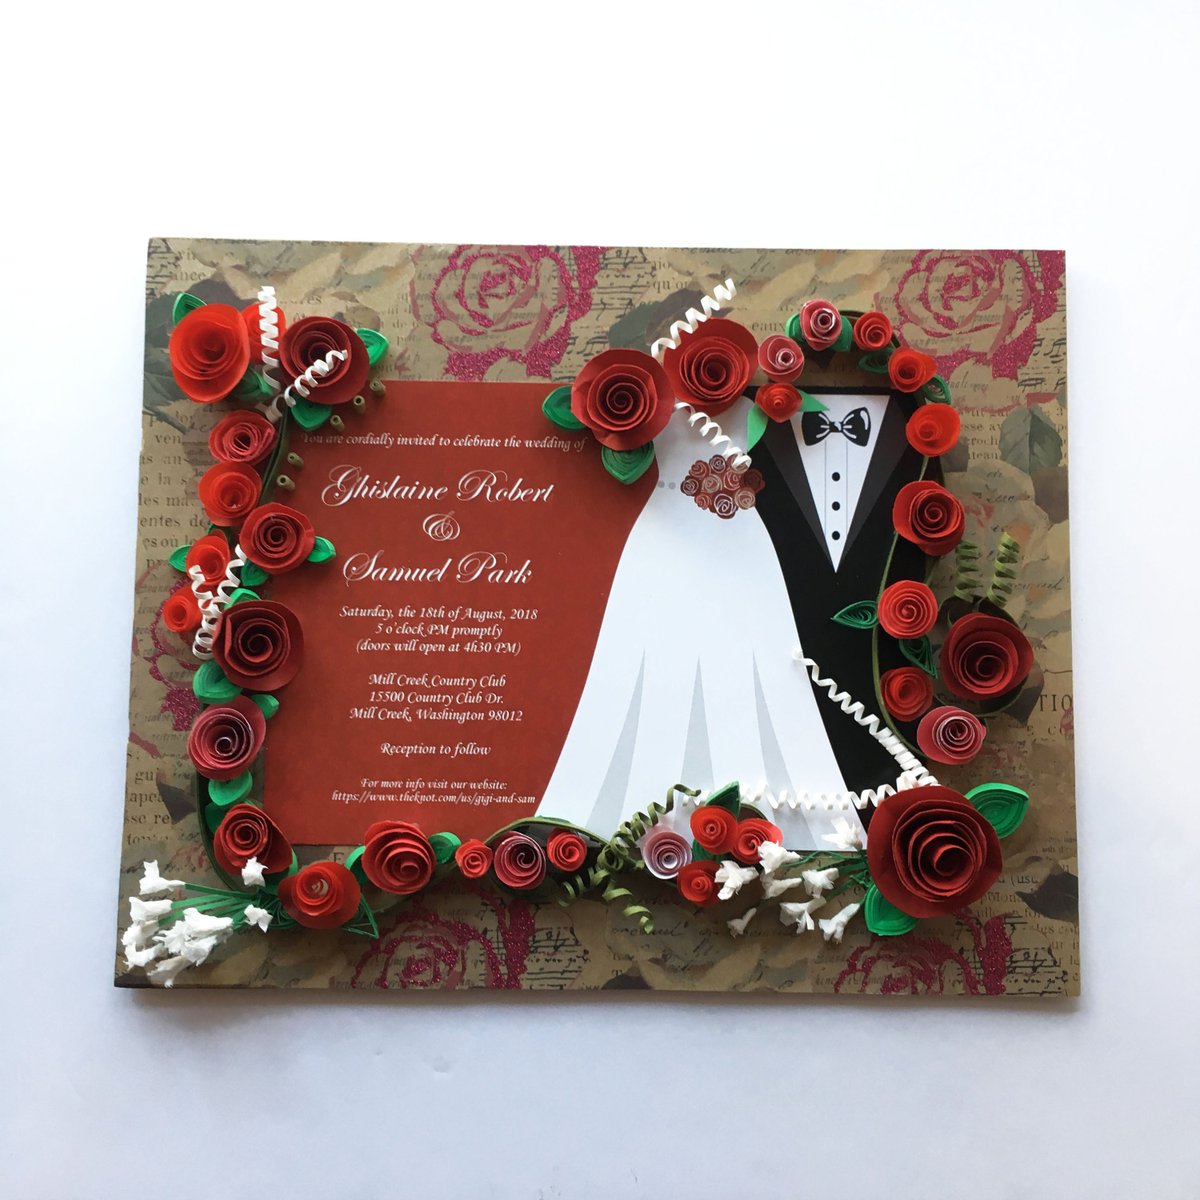 Black and Red Rose Themed Wedding Invitation Keepsake Gift seethis.co/QbKMWA/ #etsysellers #weddinginvitationkeepsake #giftforcouple #weddinginvitationgift #weddingtabledecor  #giftandmomentos #firstanniversarygift